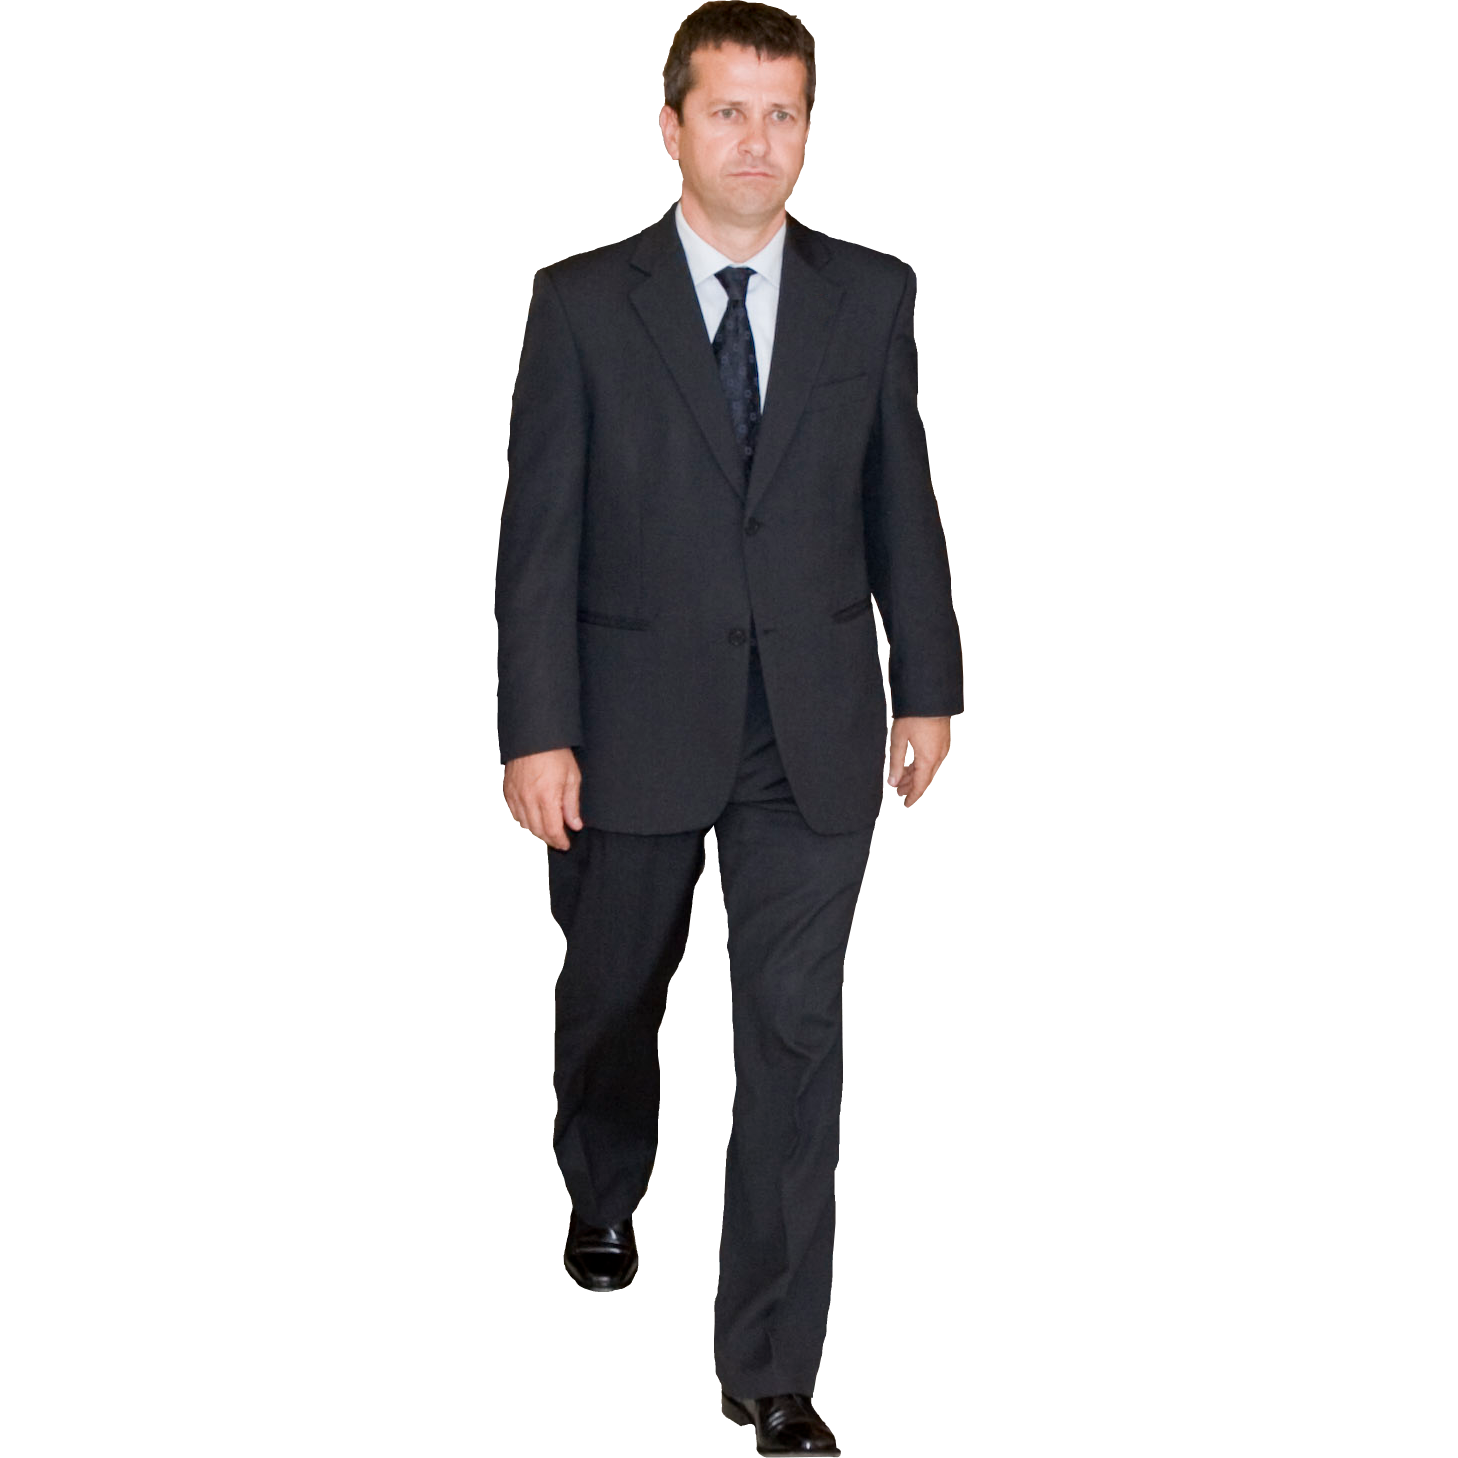 Suit Png Transparent Image - Guy In A Suit, Transparent background PNG HD thumbnail